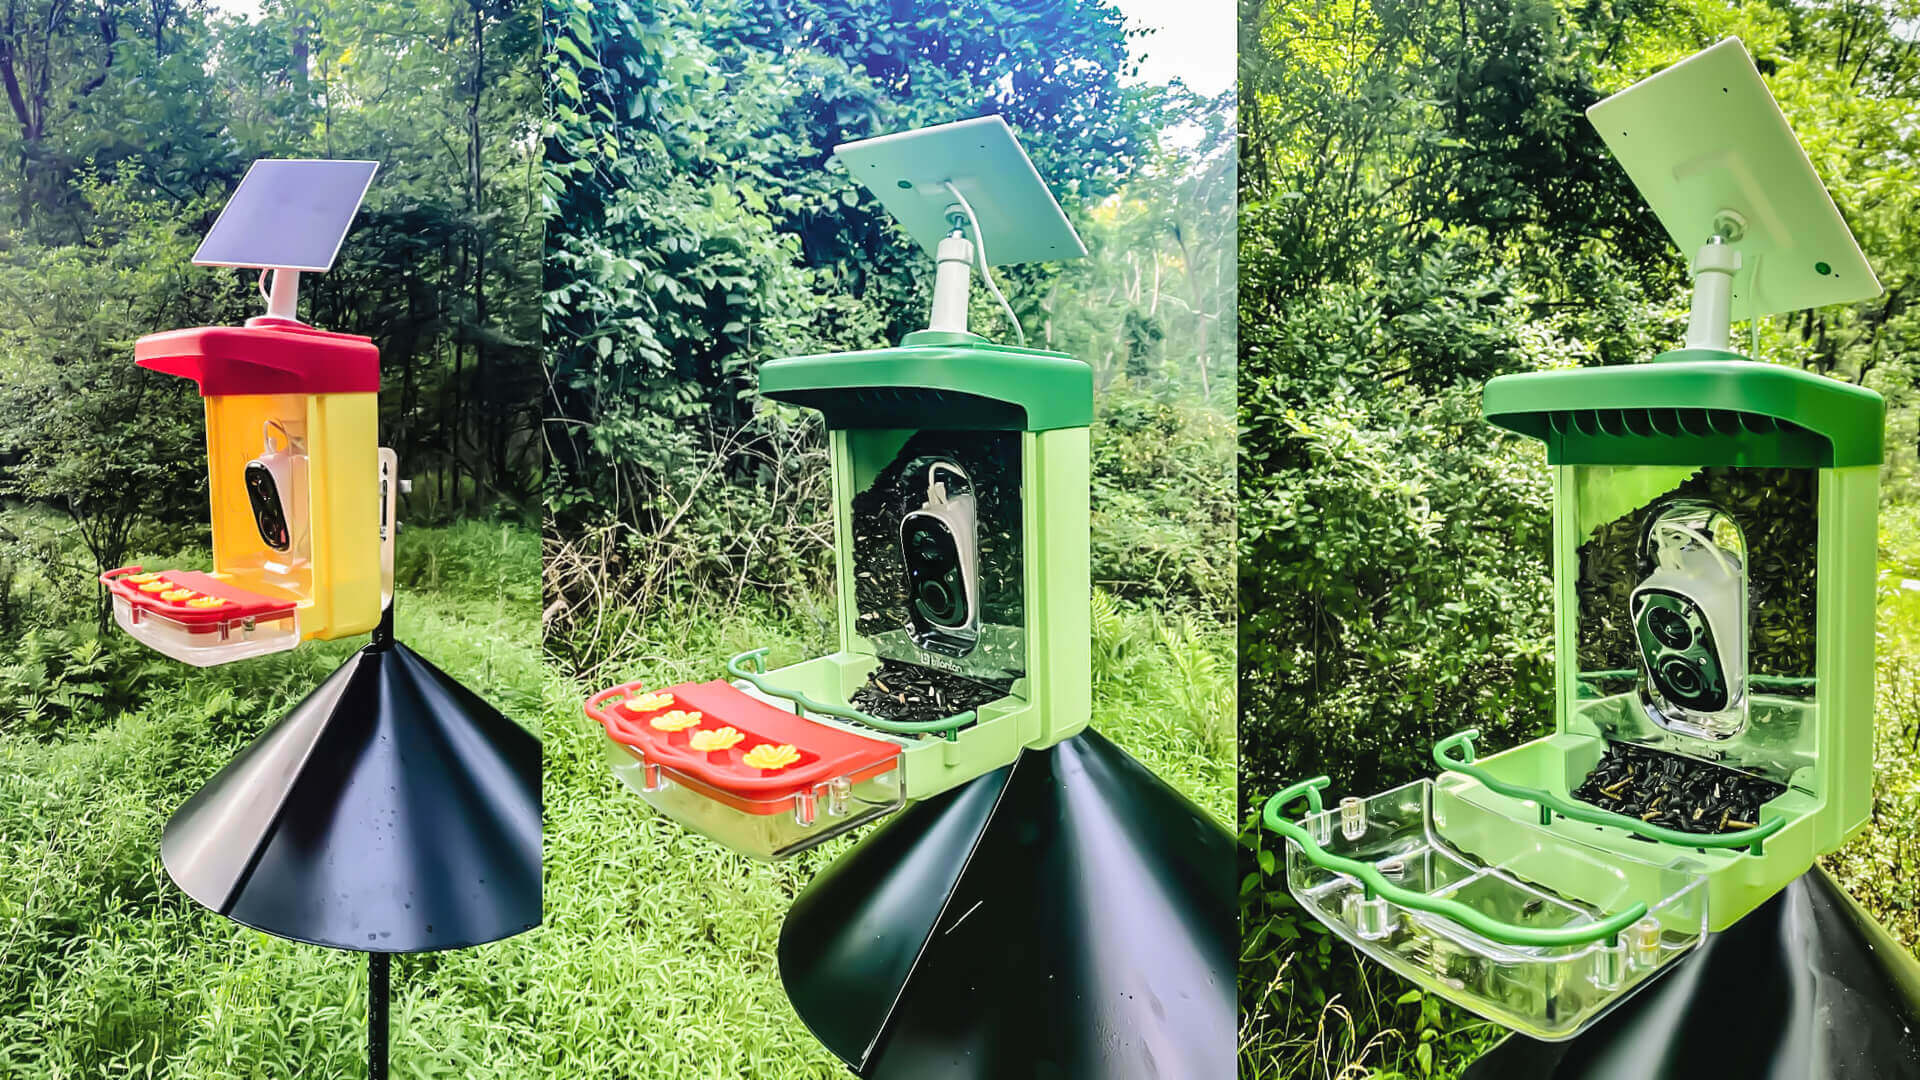 Bilantan DIY Bird Feeder Camera, rain guard for bird feeder, classic brands bird feeder